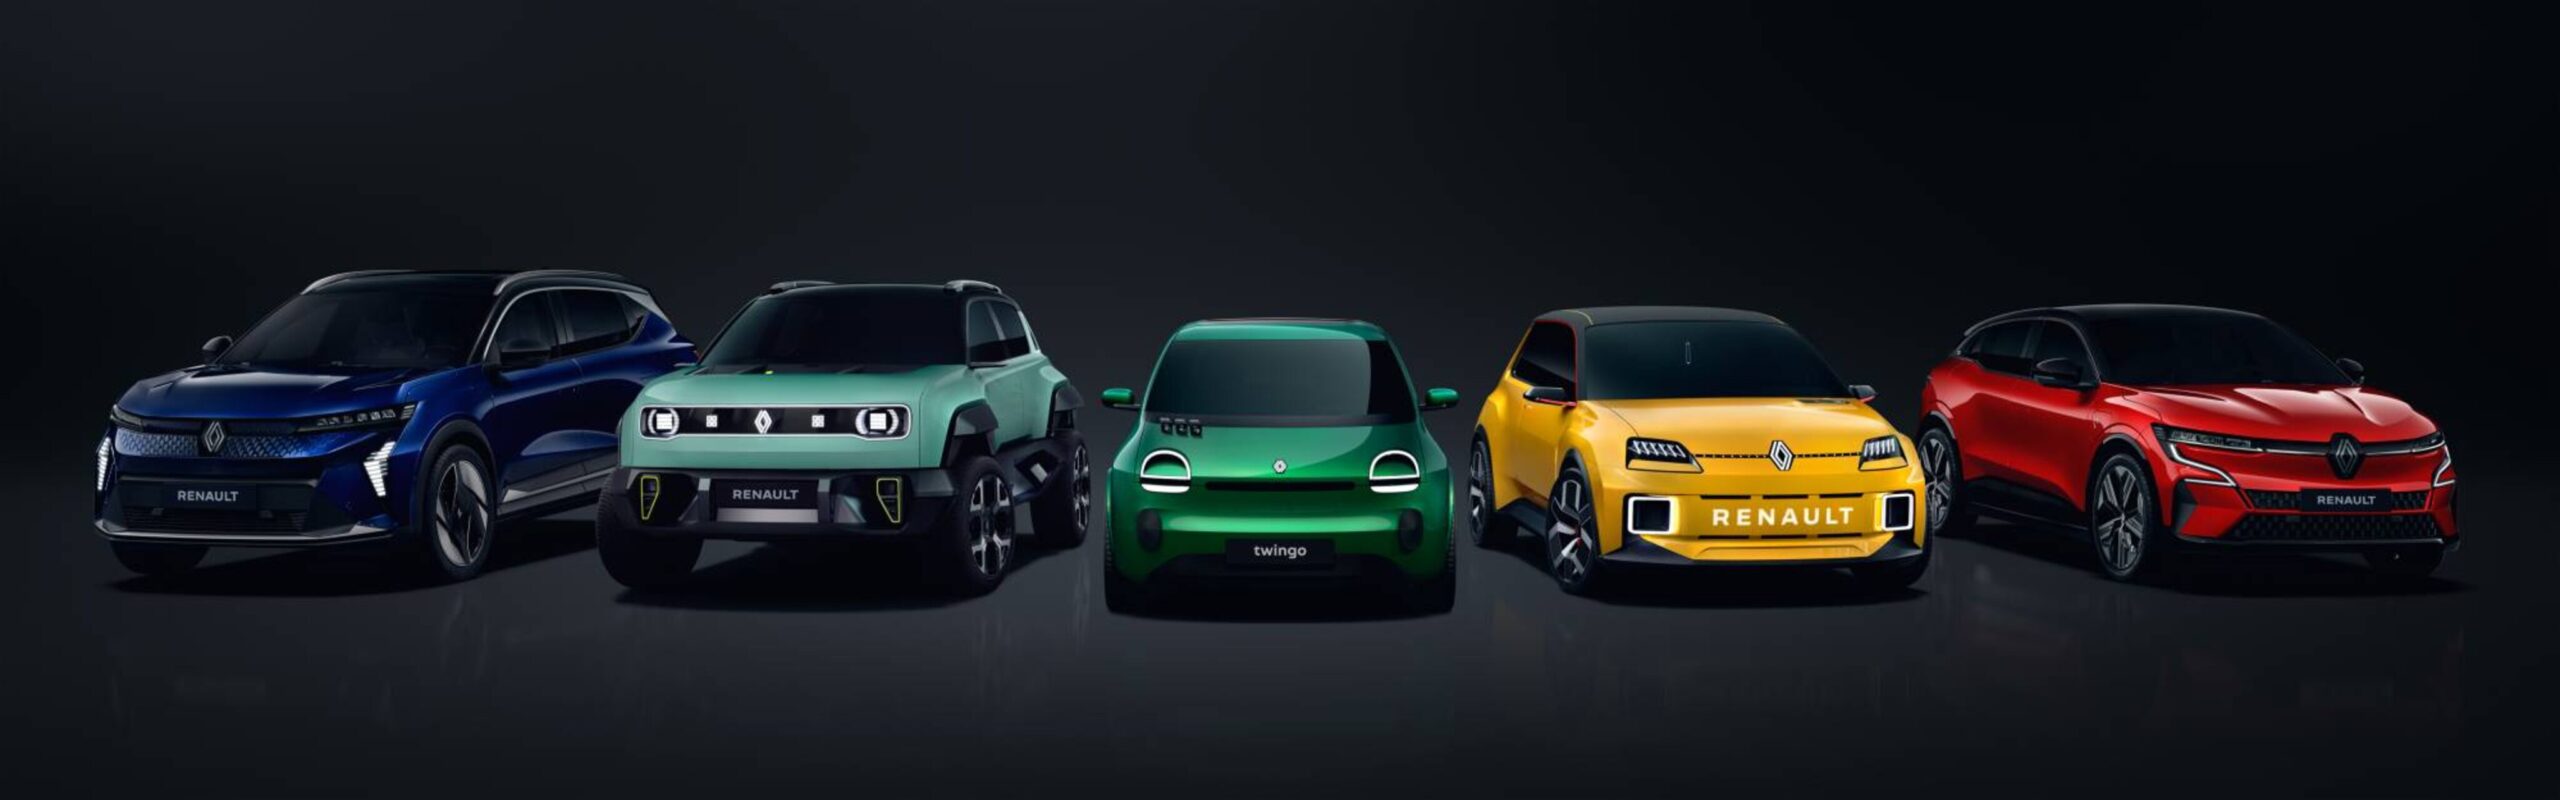 Лаборатория инноваций: Mégane E-Tech, Scénic E-Tech, Renault 5, Renault 4 и Renault Twingo.